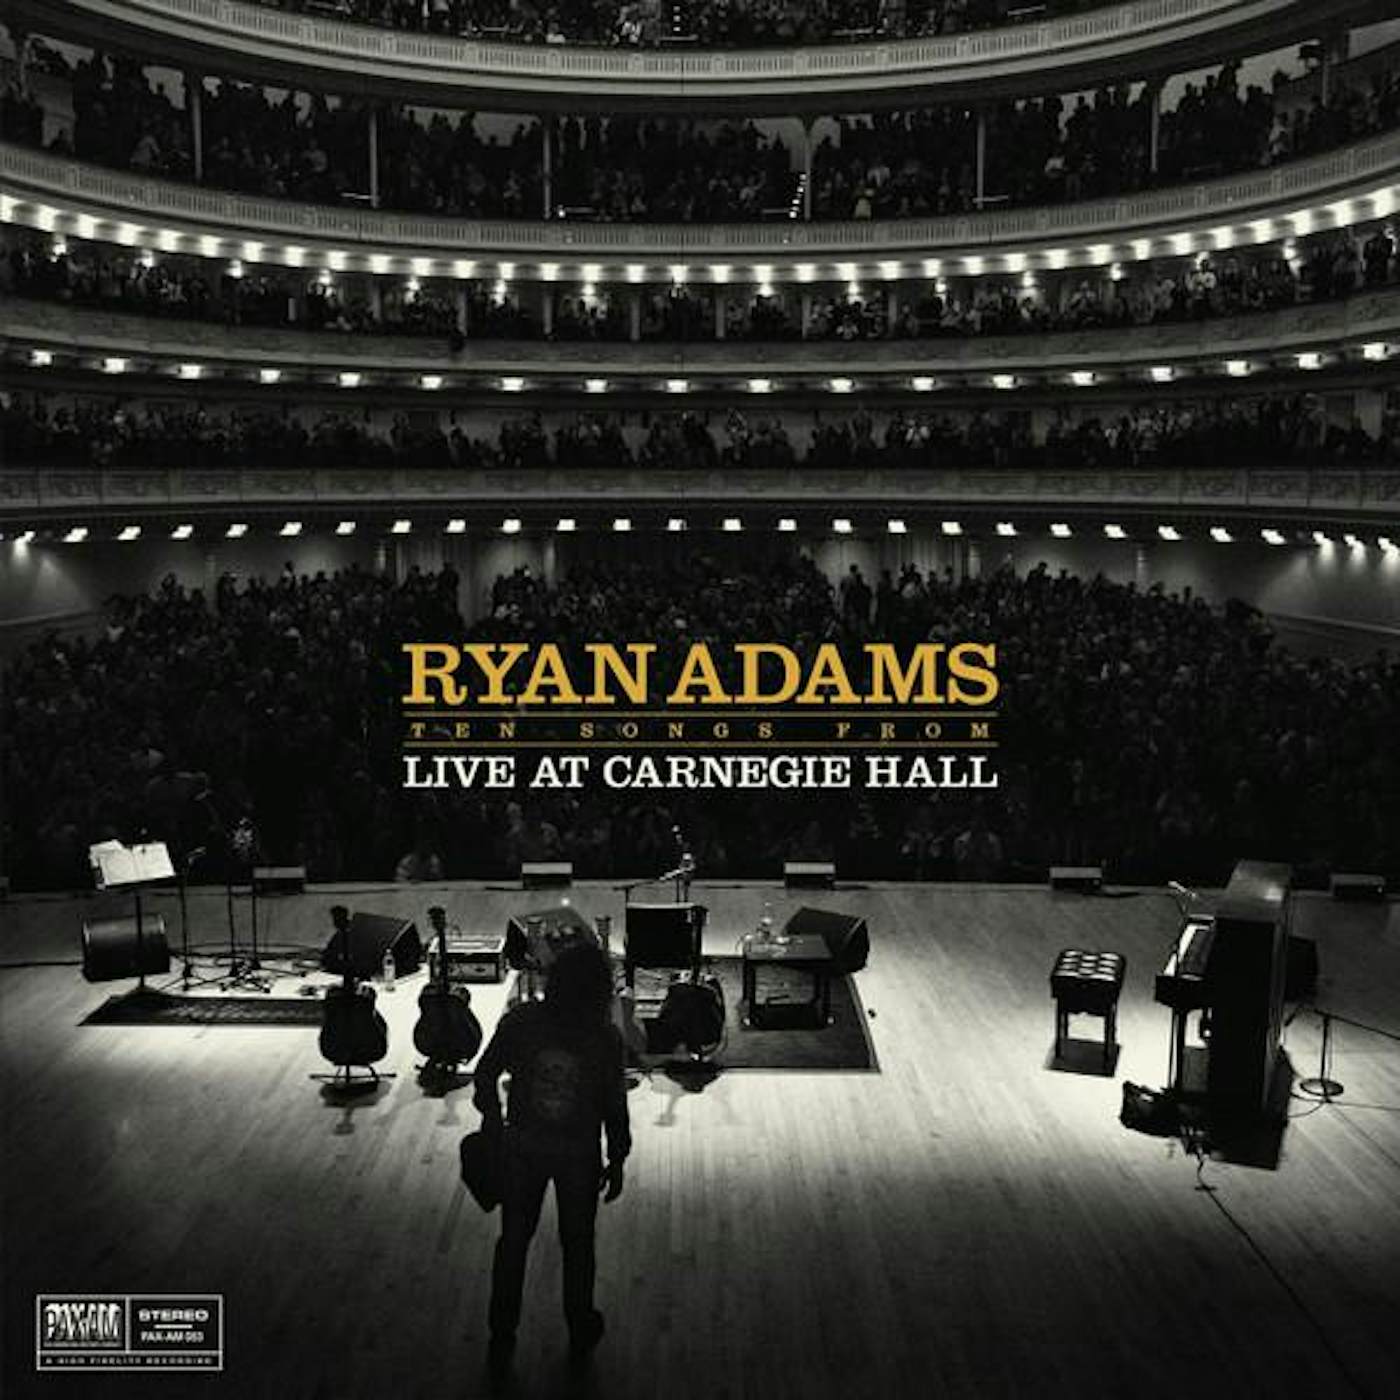 Ryan Adams TEN SONGS FROM: LIVE AT CARNEGIE HALL CD